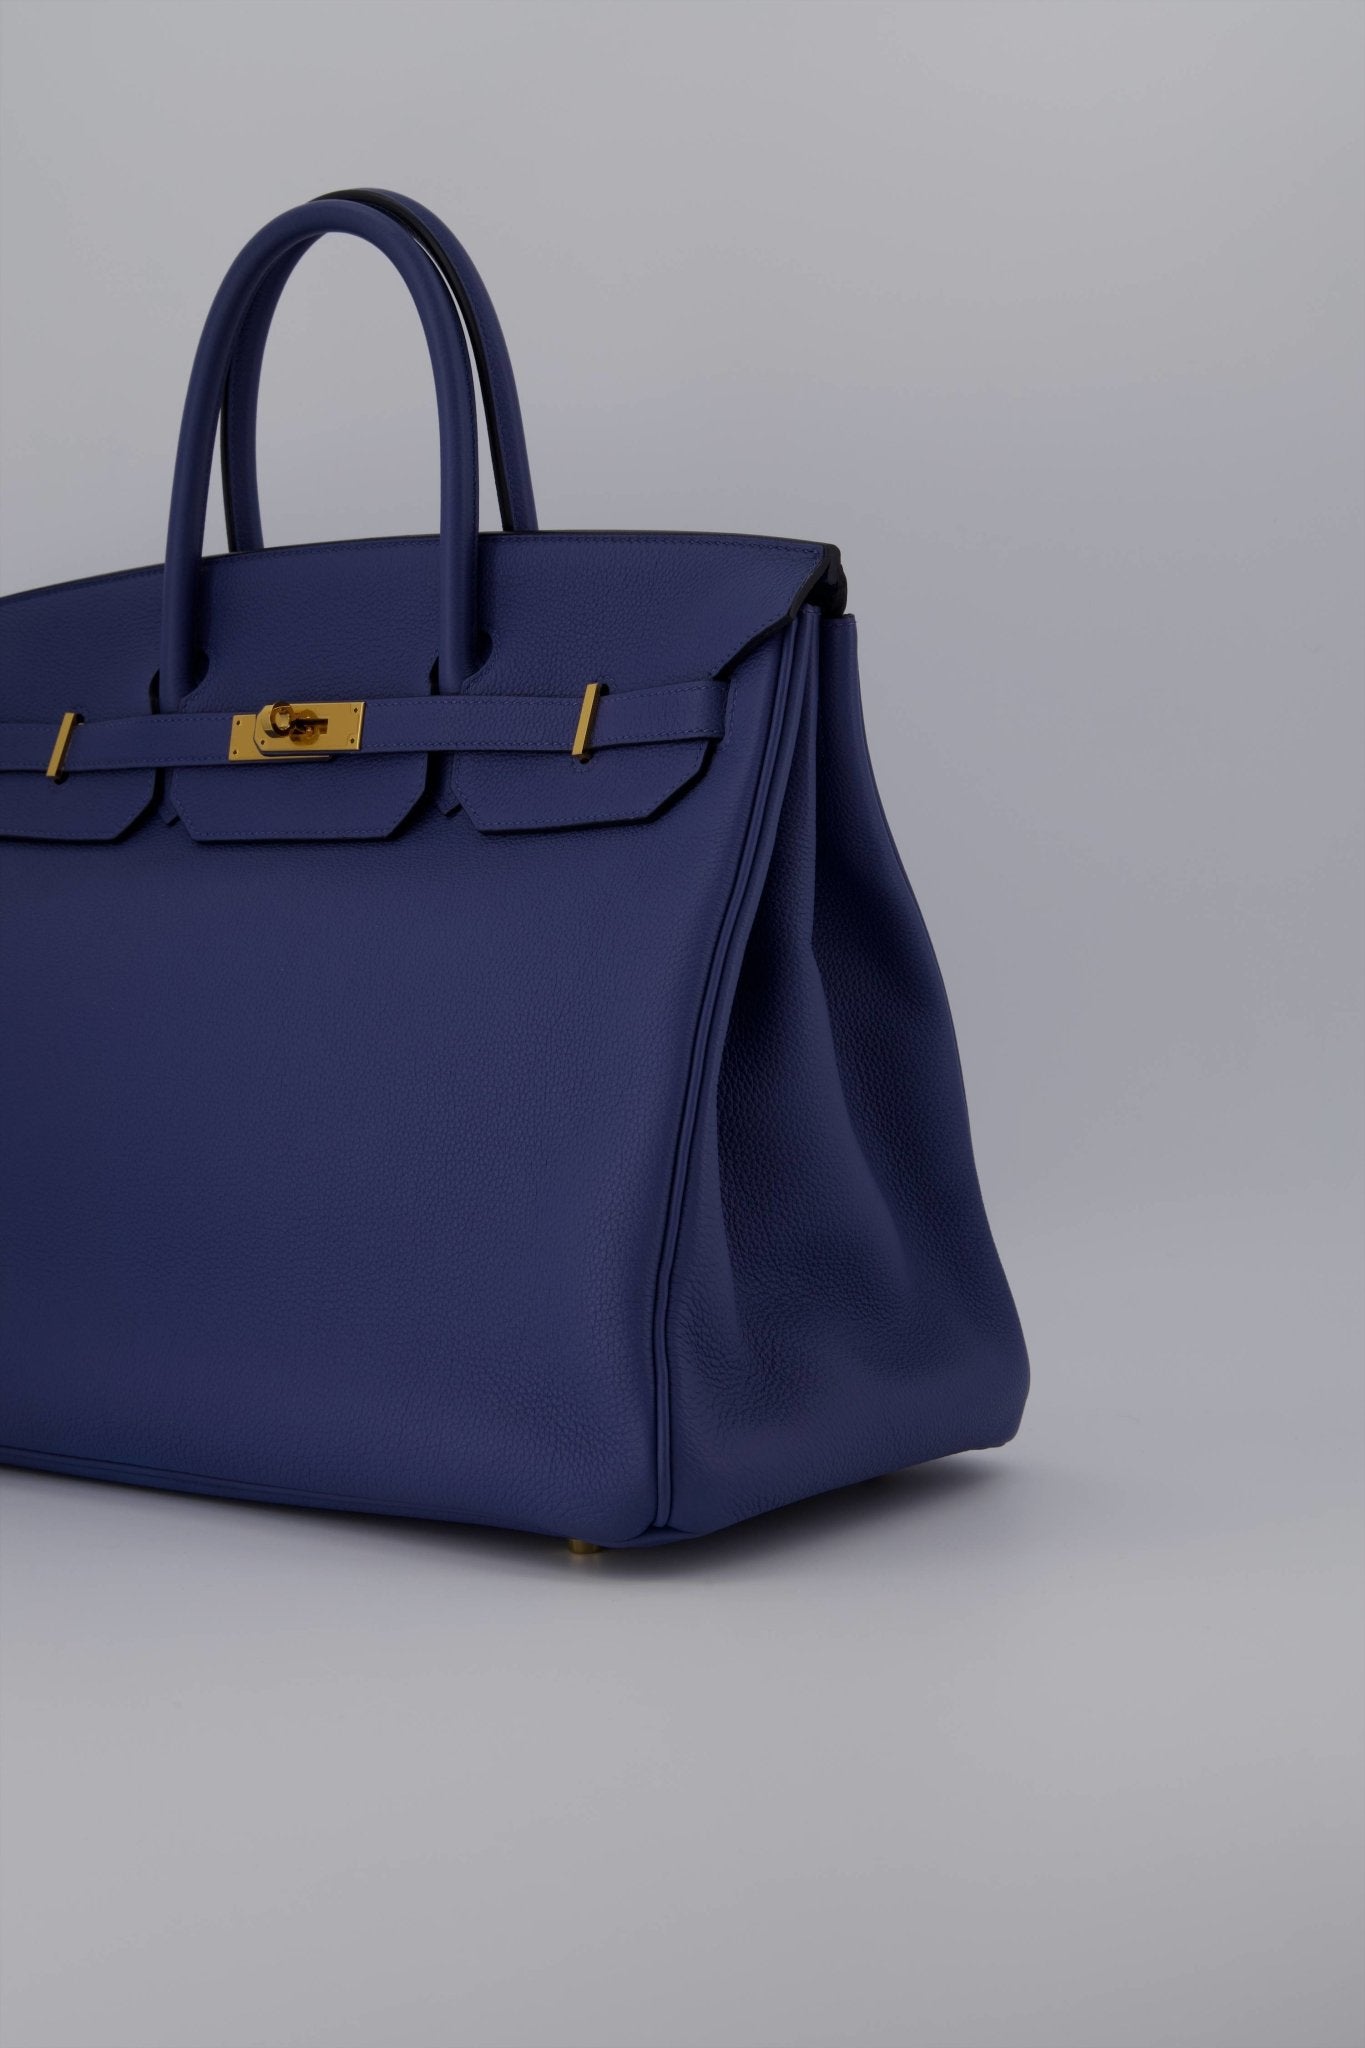 Hermes Birkin 40 Handbag Blue Brighton Togo Leather With Gold